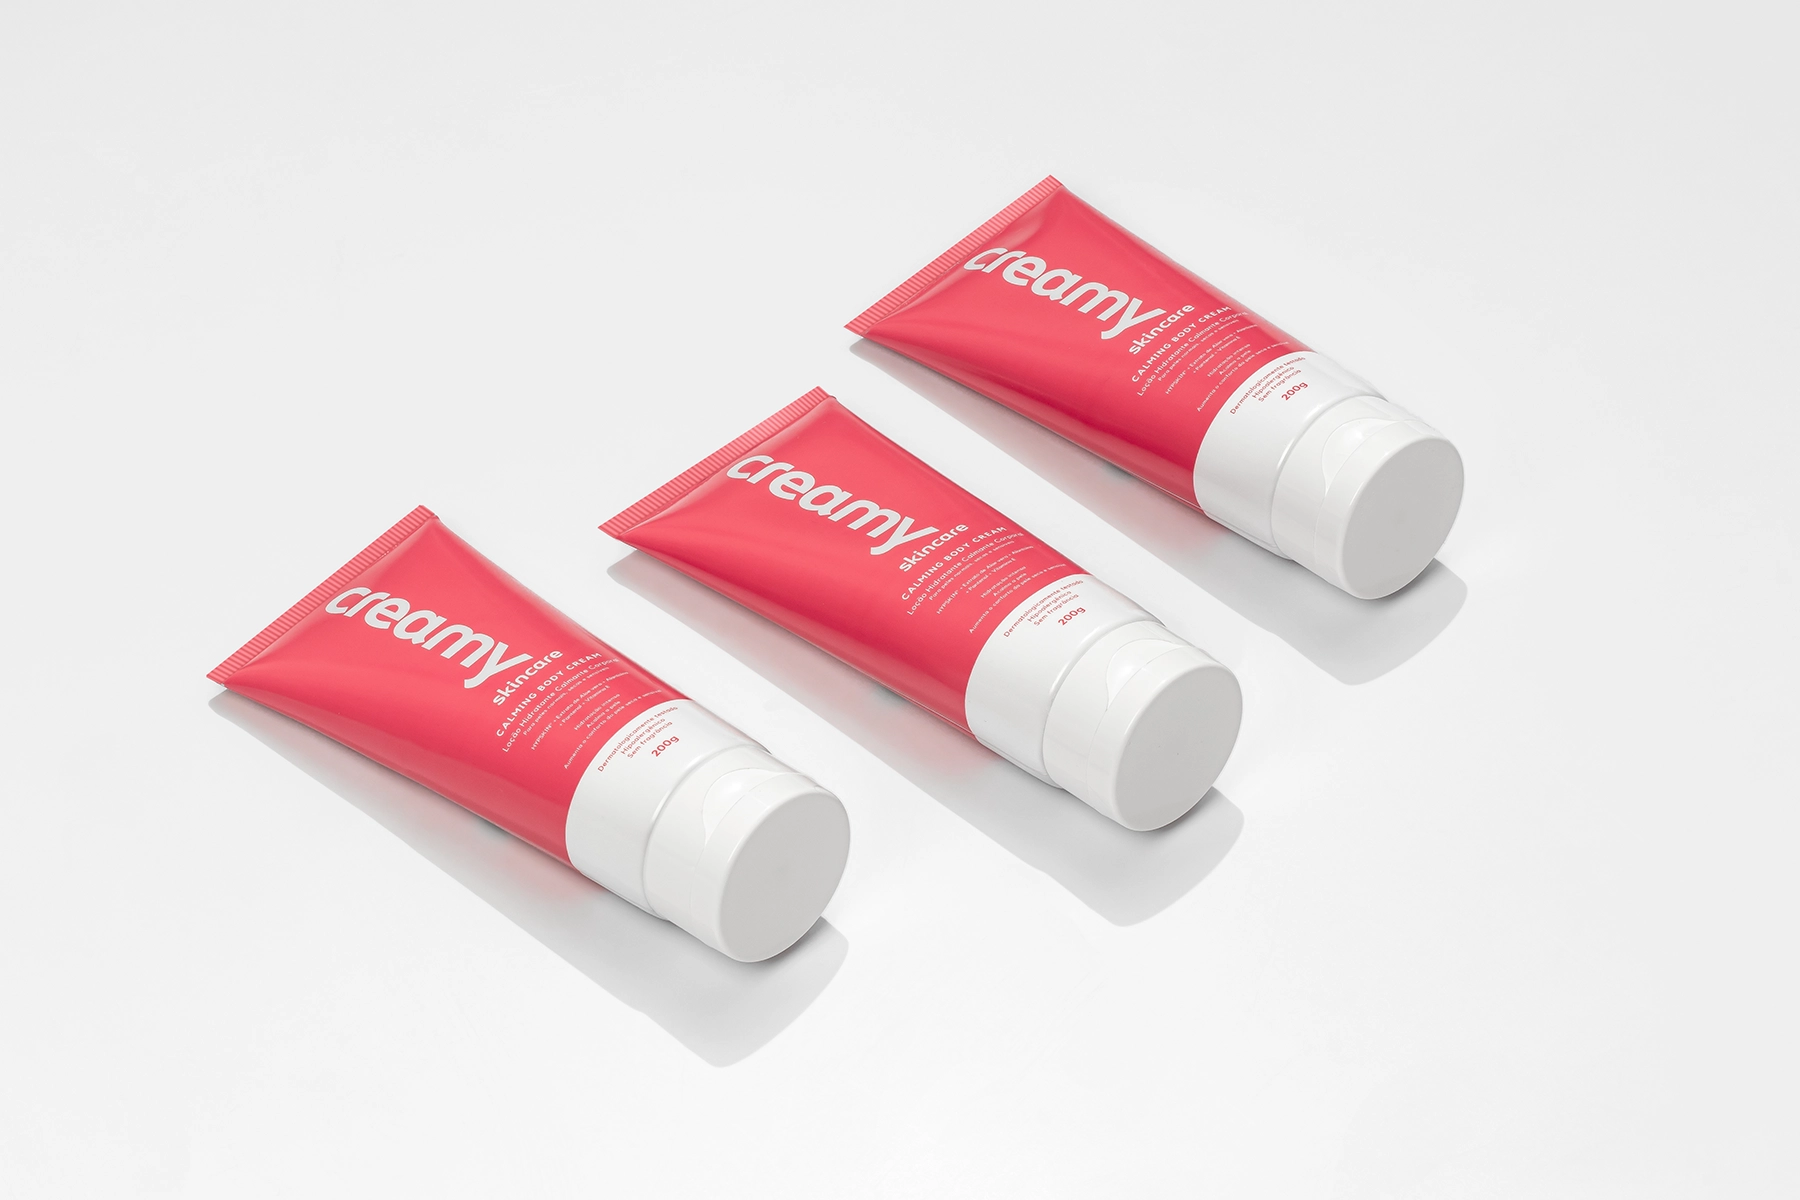 Creamy lança seu primeiro produto para o corpo